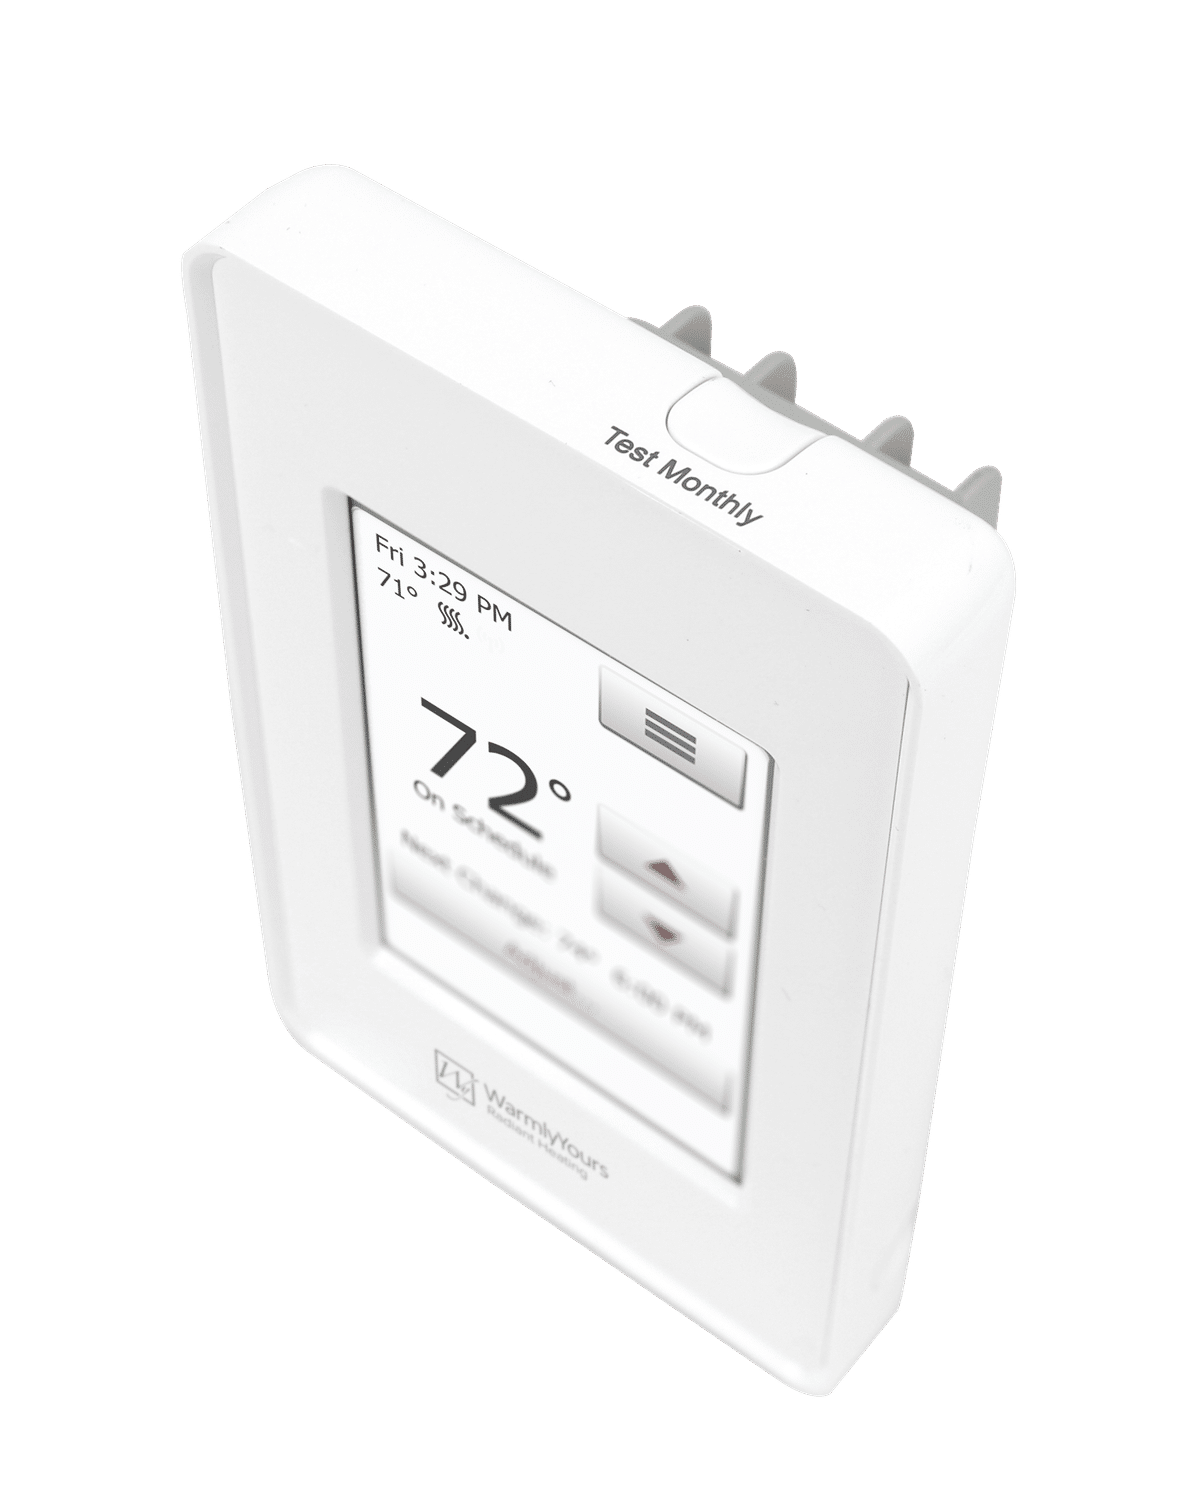 TEV-4 / Outdoor thermostat - Xbau